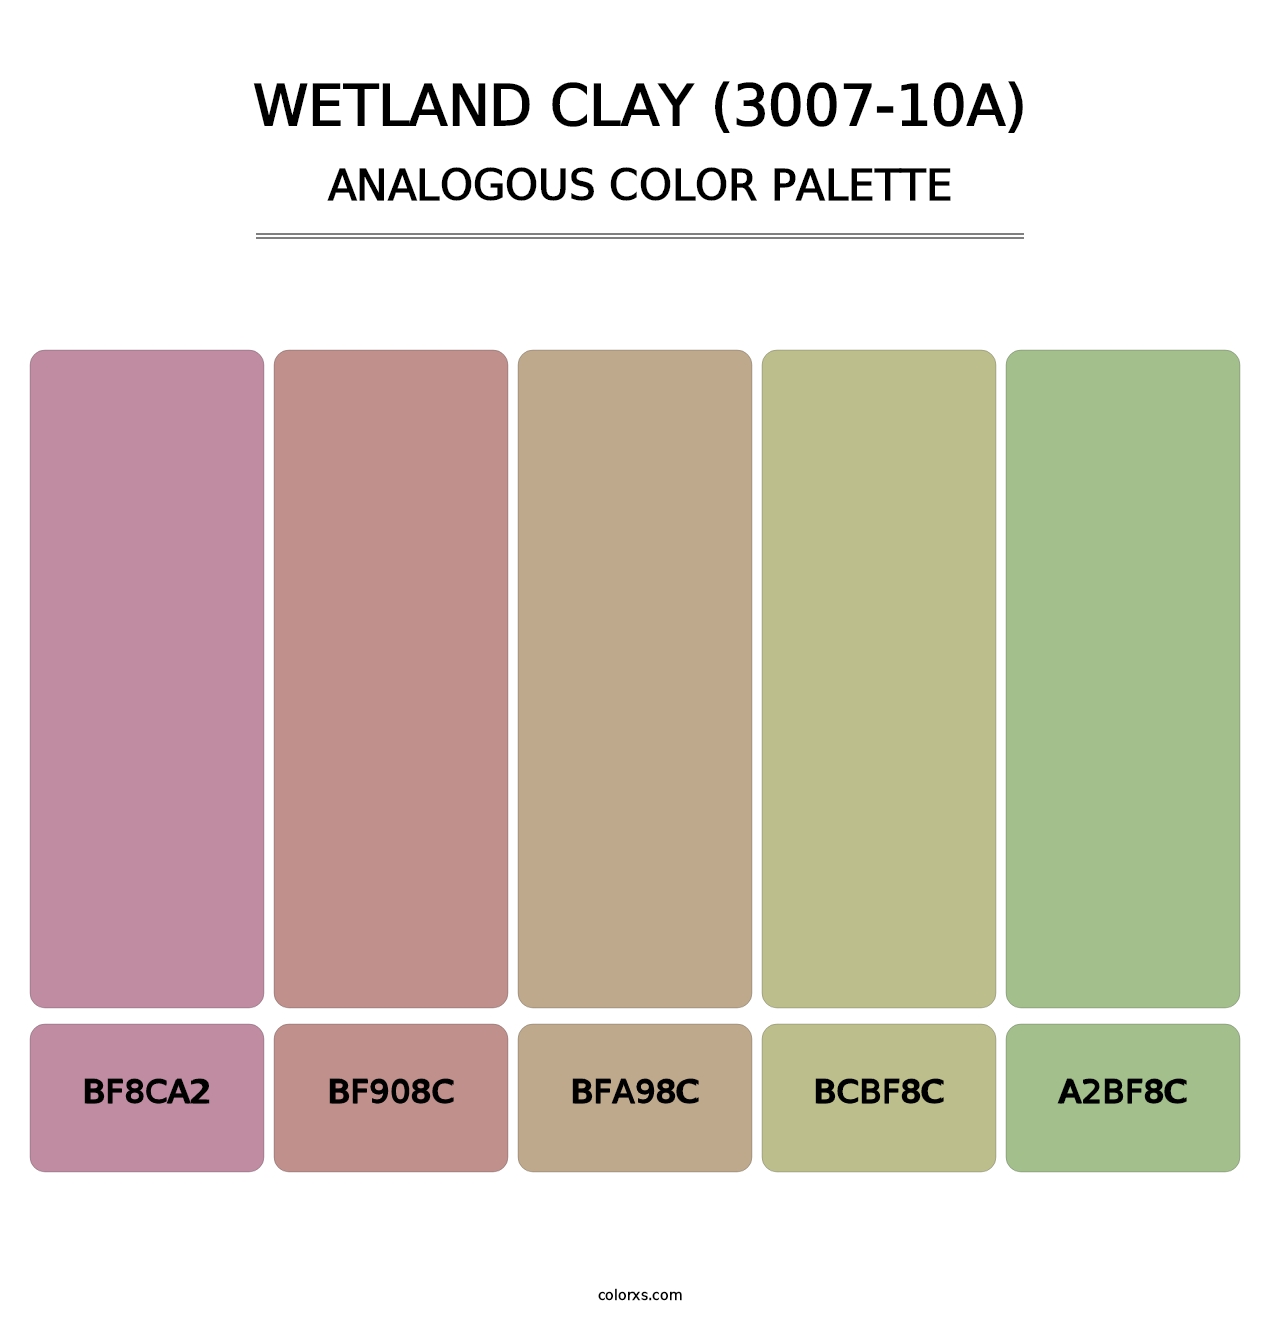 Wetland Clay (3007-10A) - Analogous Color Palette